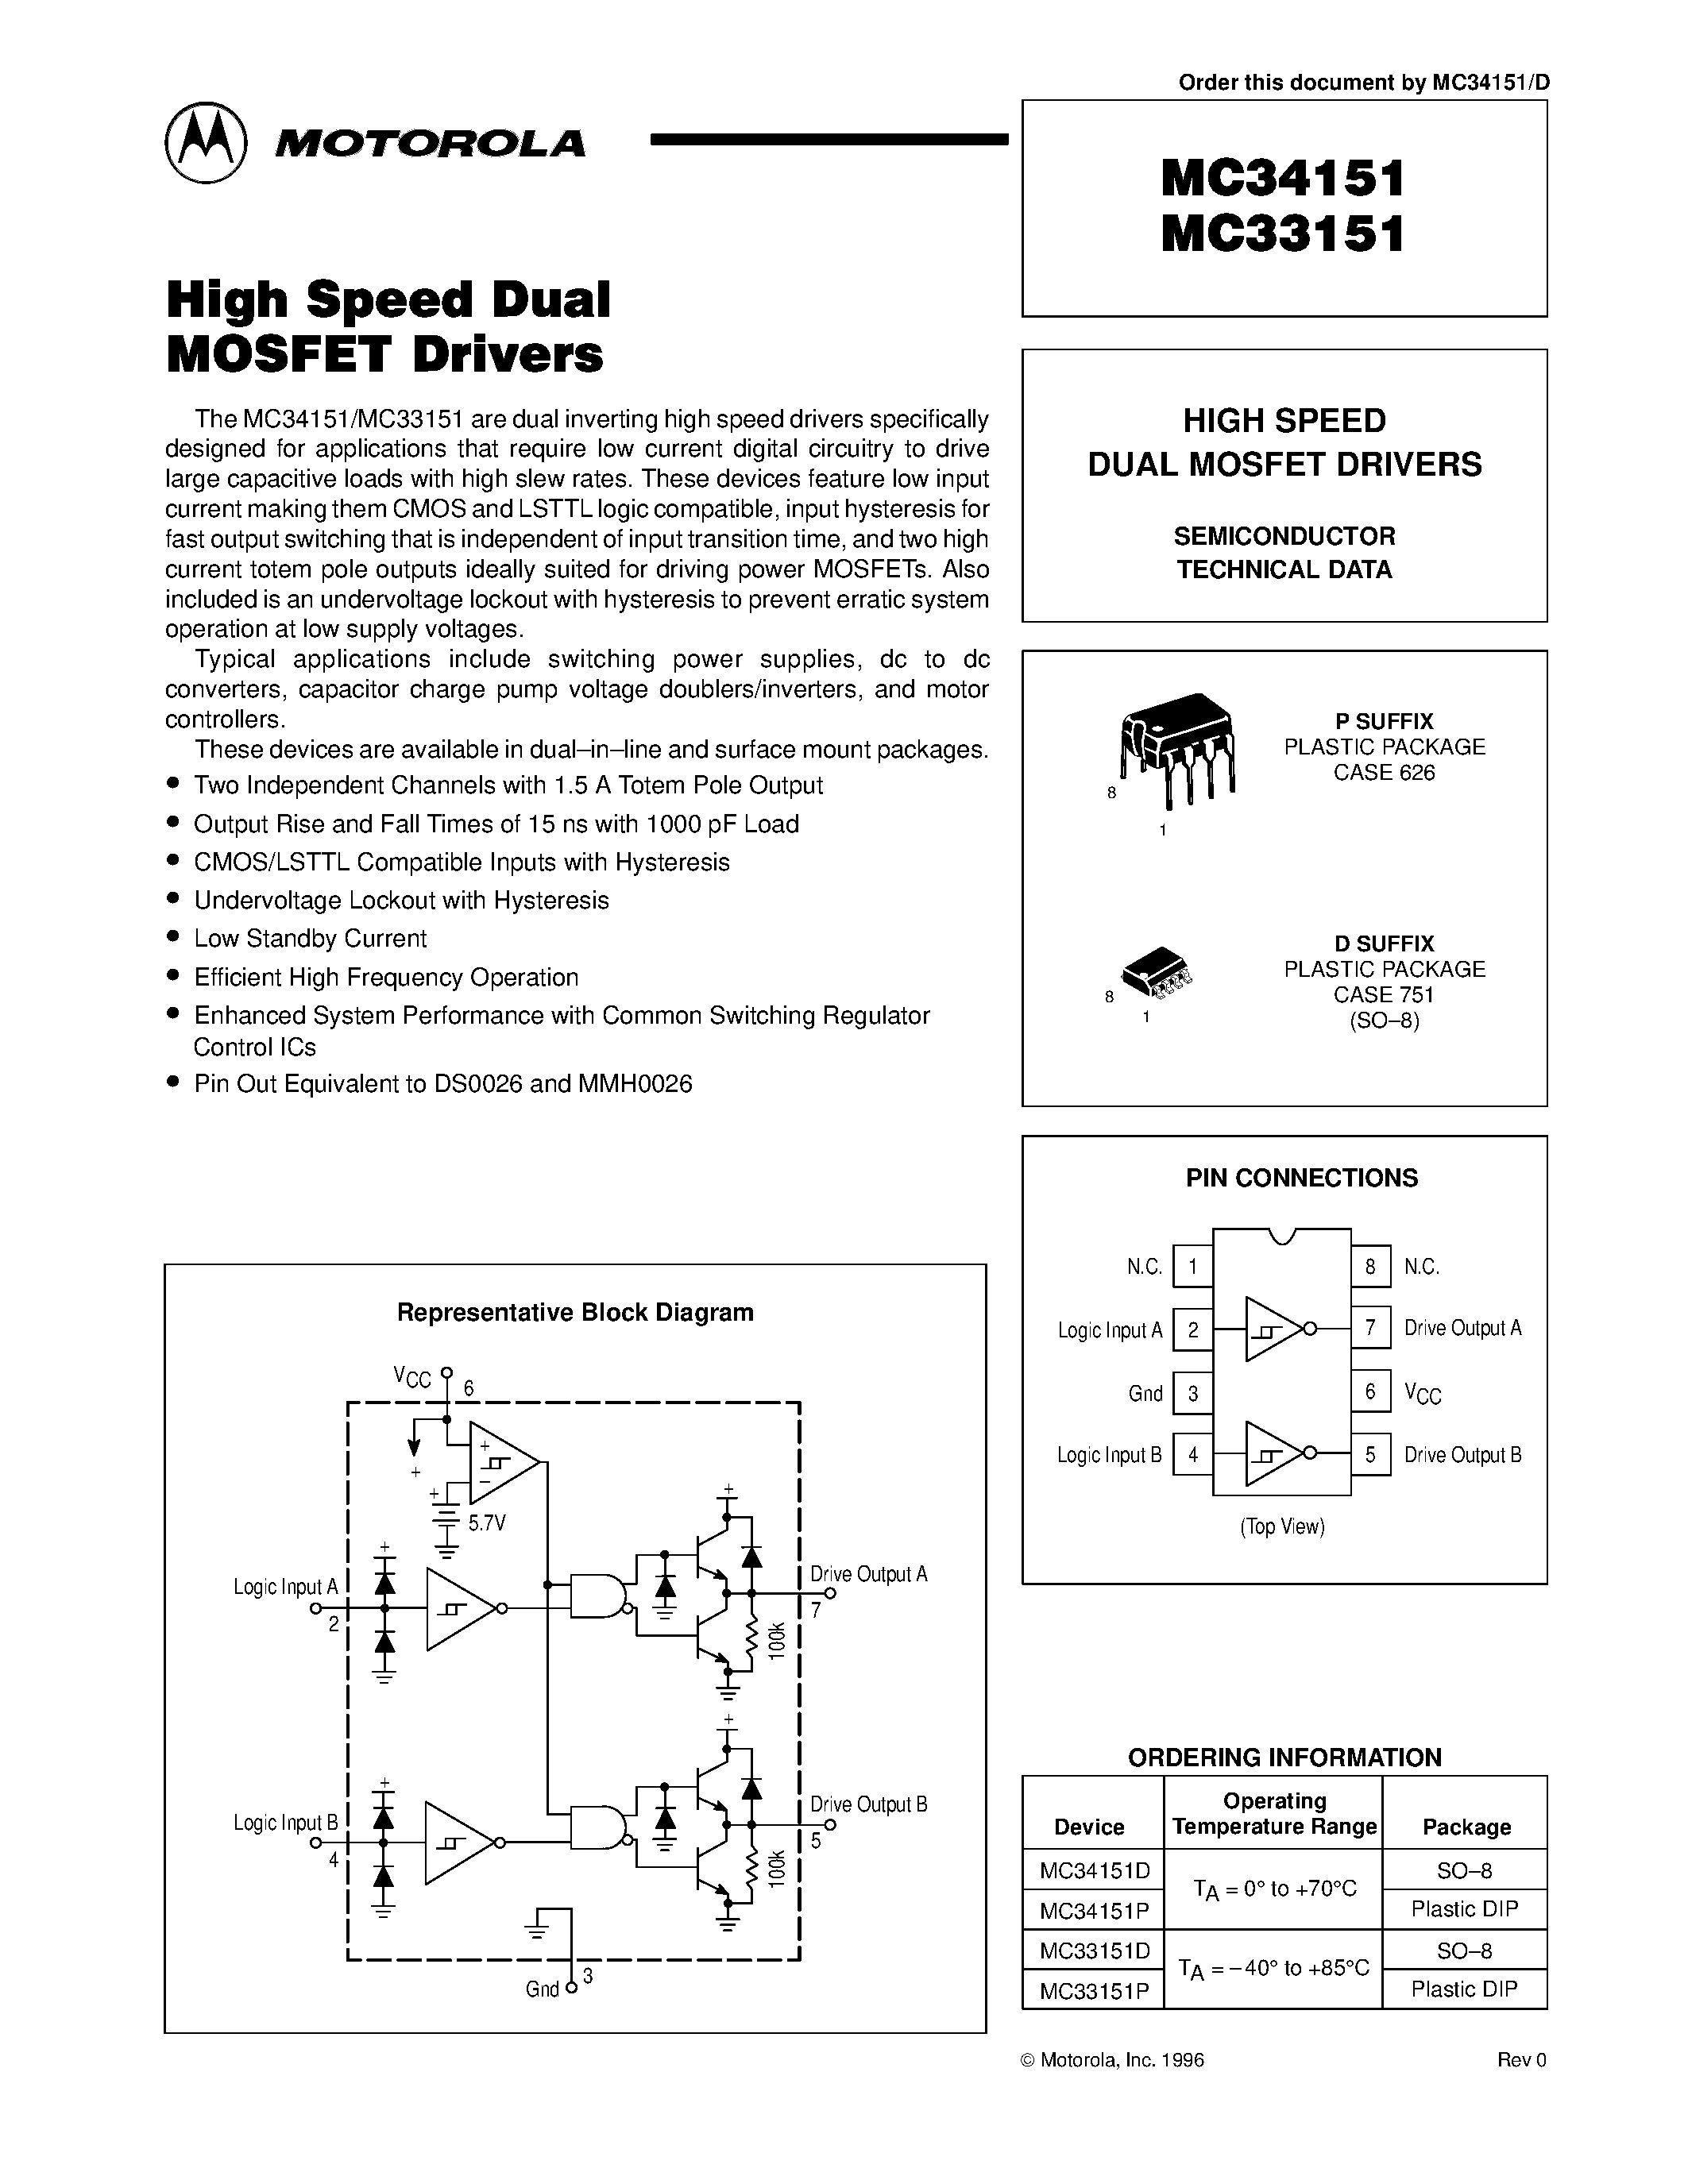 Datasheet MC33151 - (MC34151 / MC33151) HIGH SPEED DUAL MOSFET DRIVERS page 1